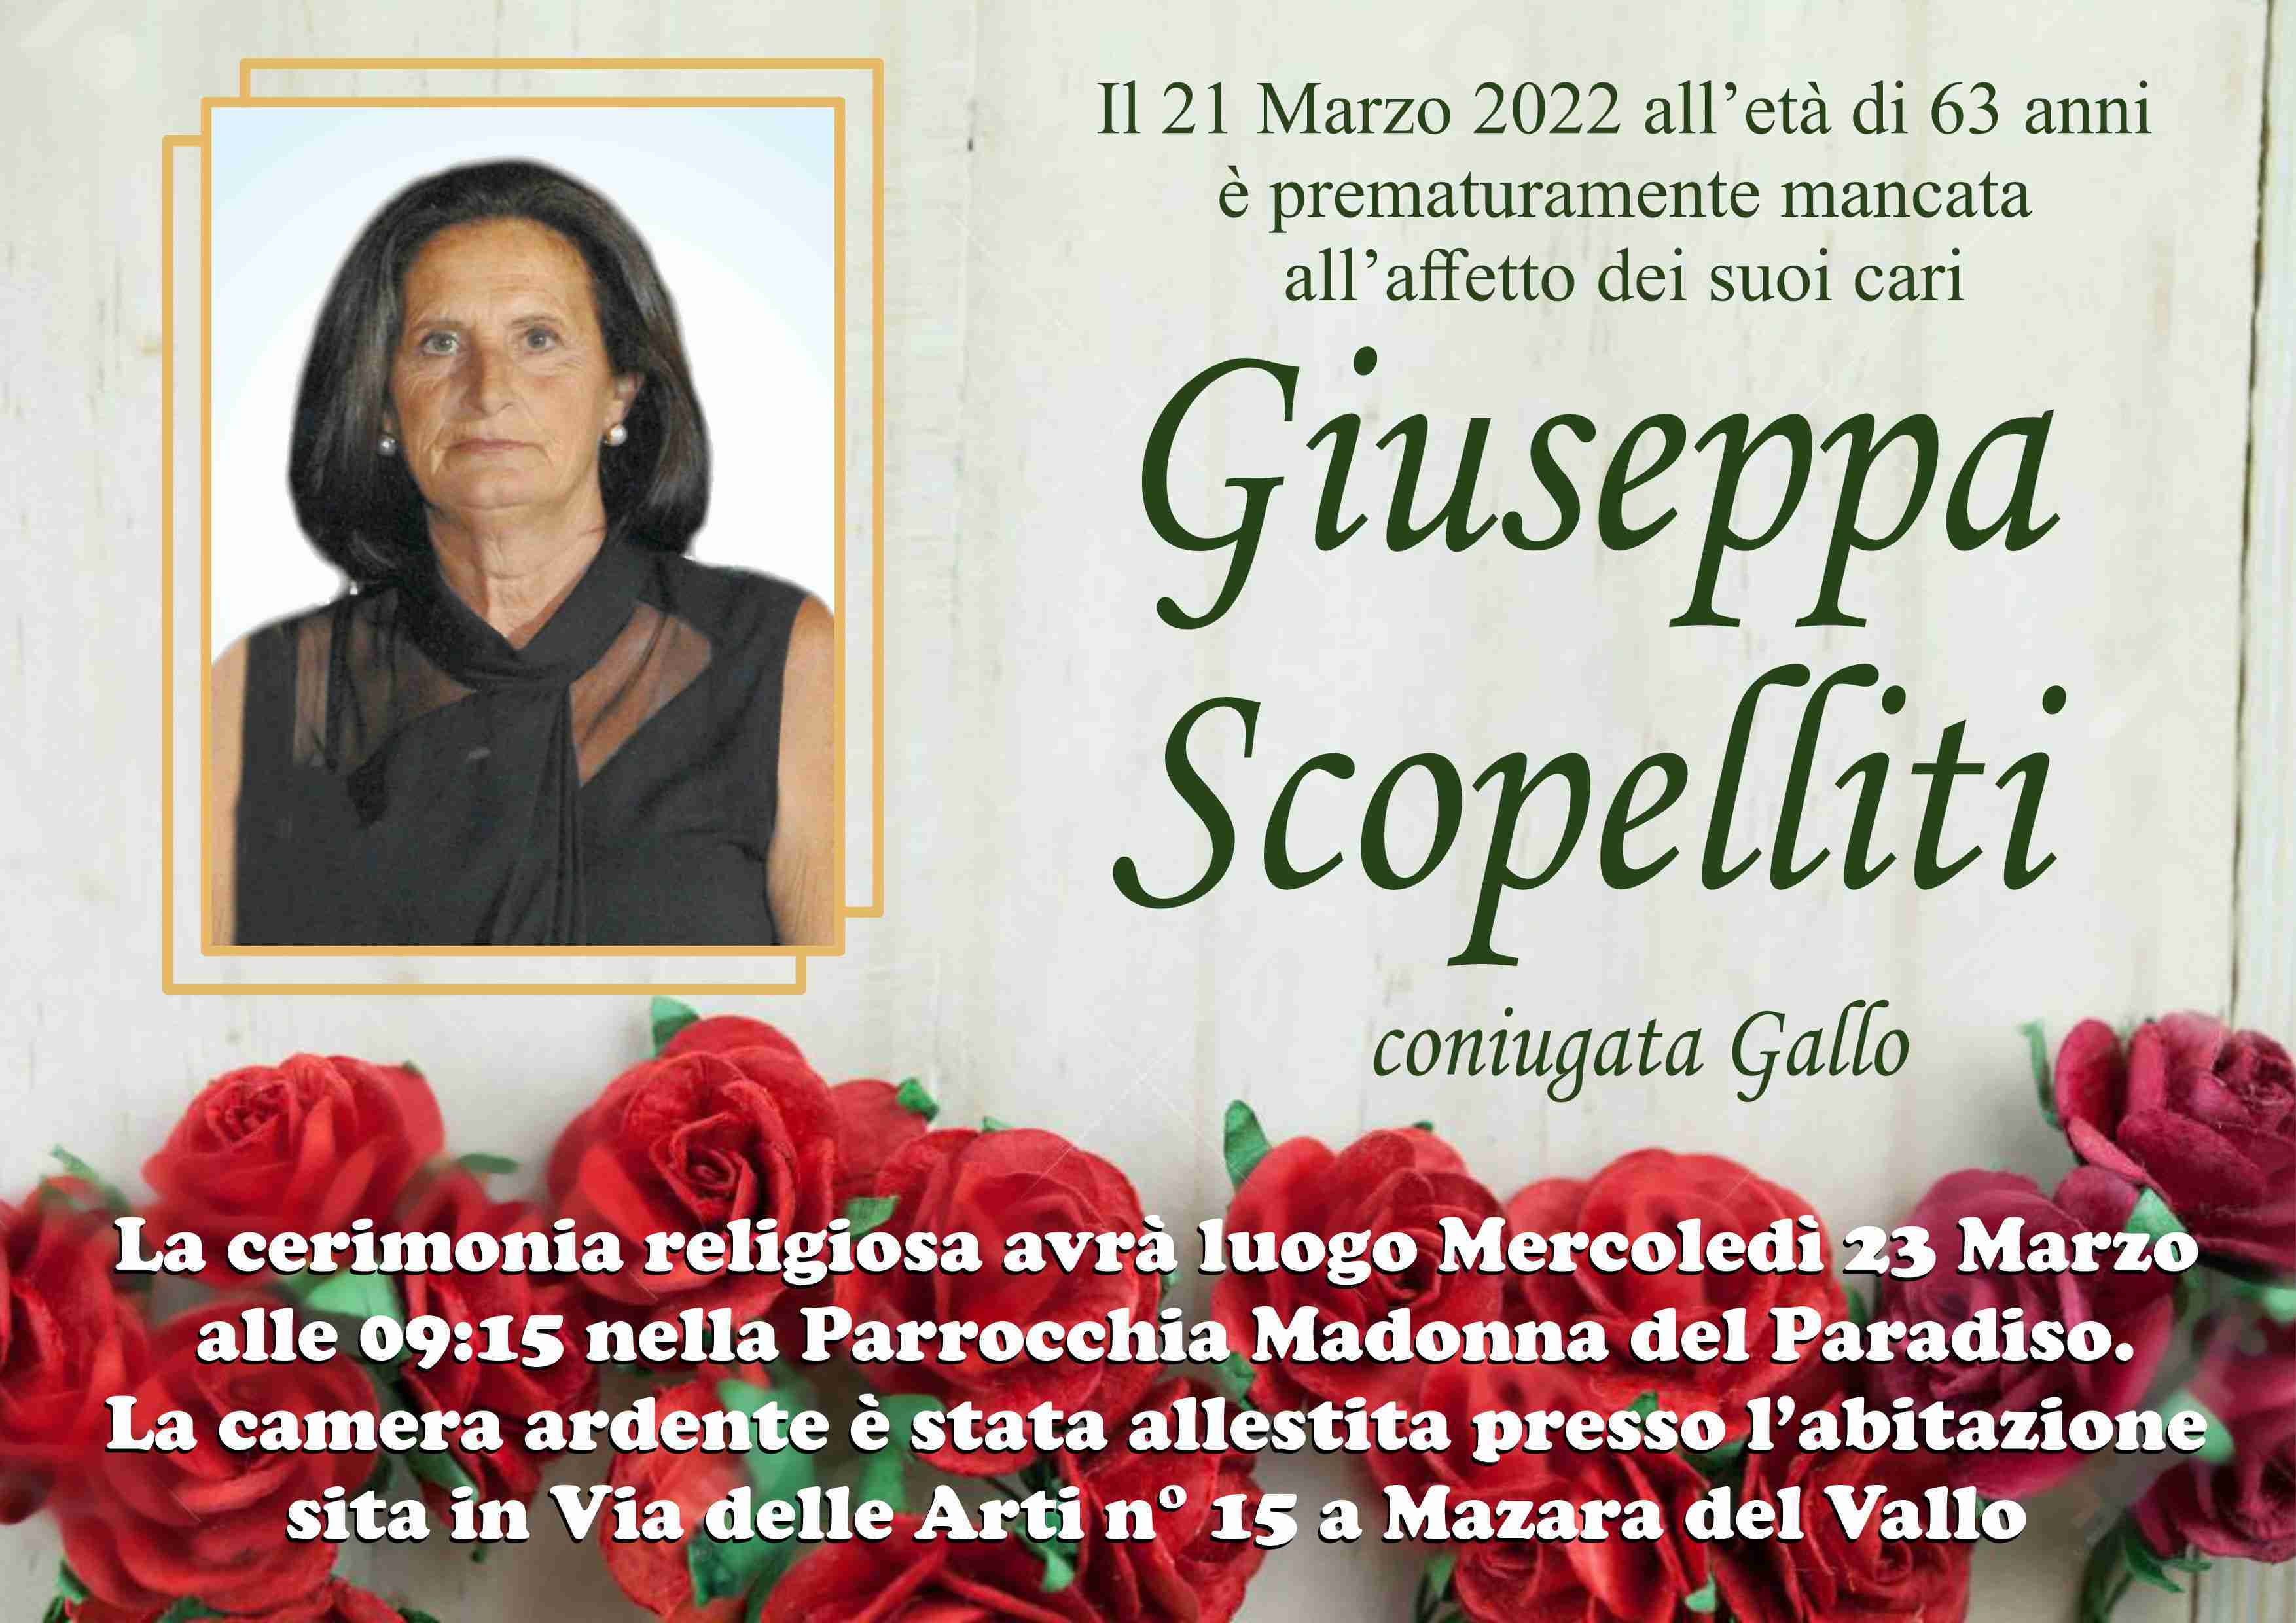 Giuseppa Scopelliti